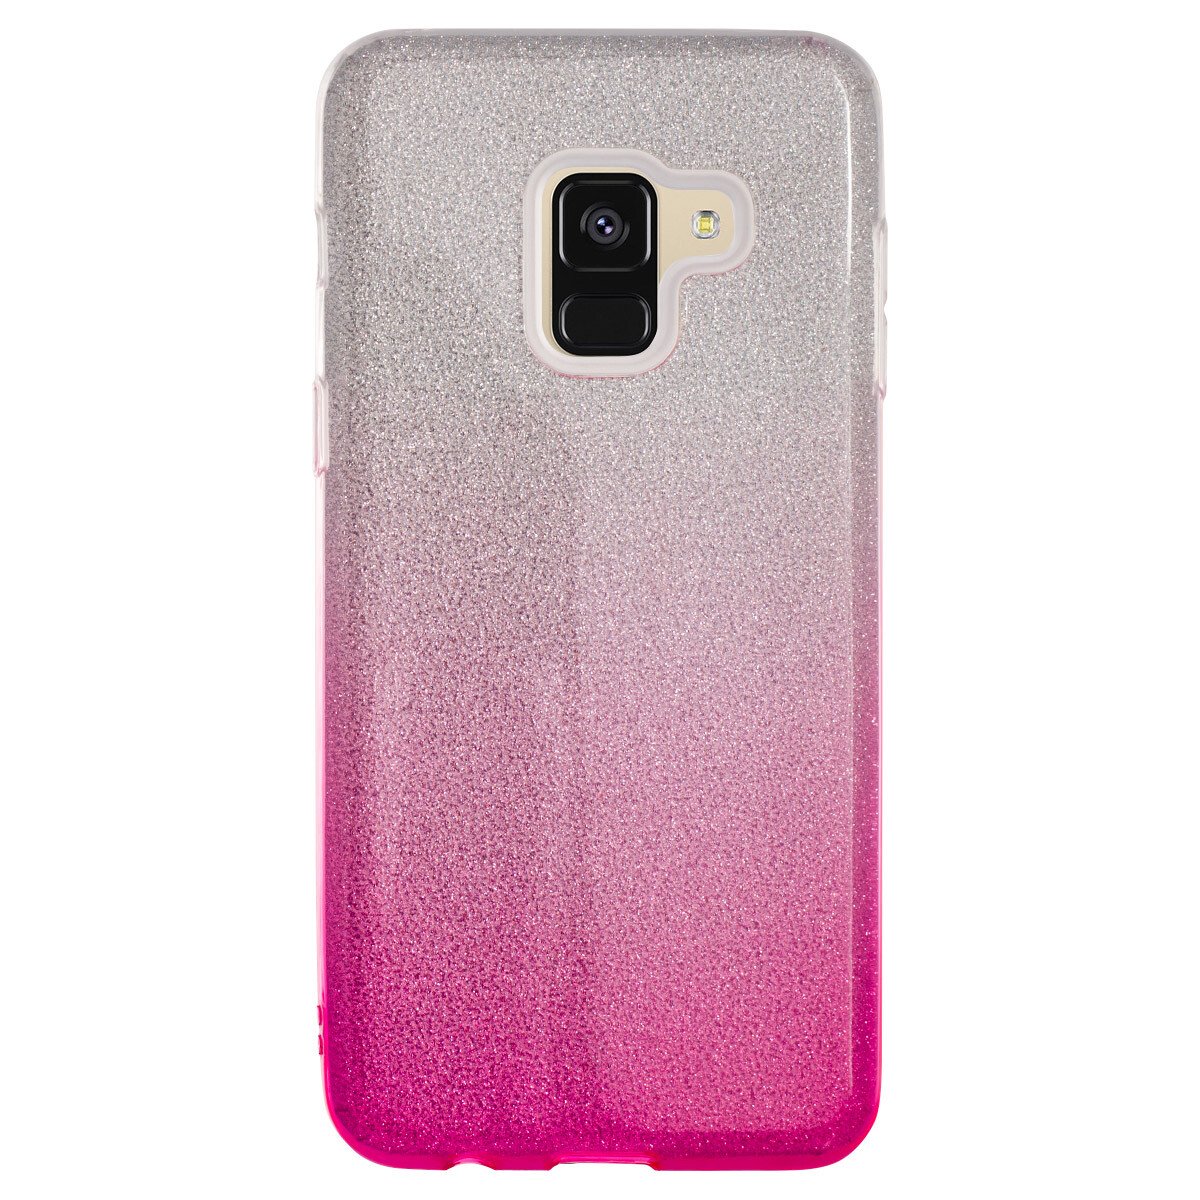 Husa Fashion Samsung Galaxy A8 2018, Glitter Roz thumb